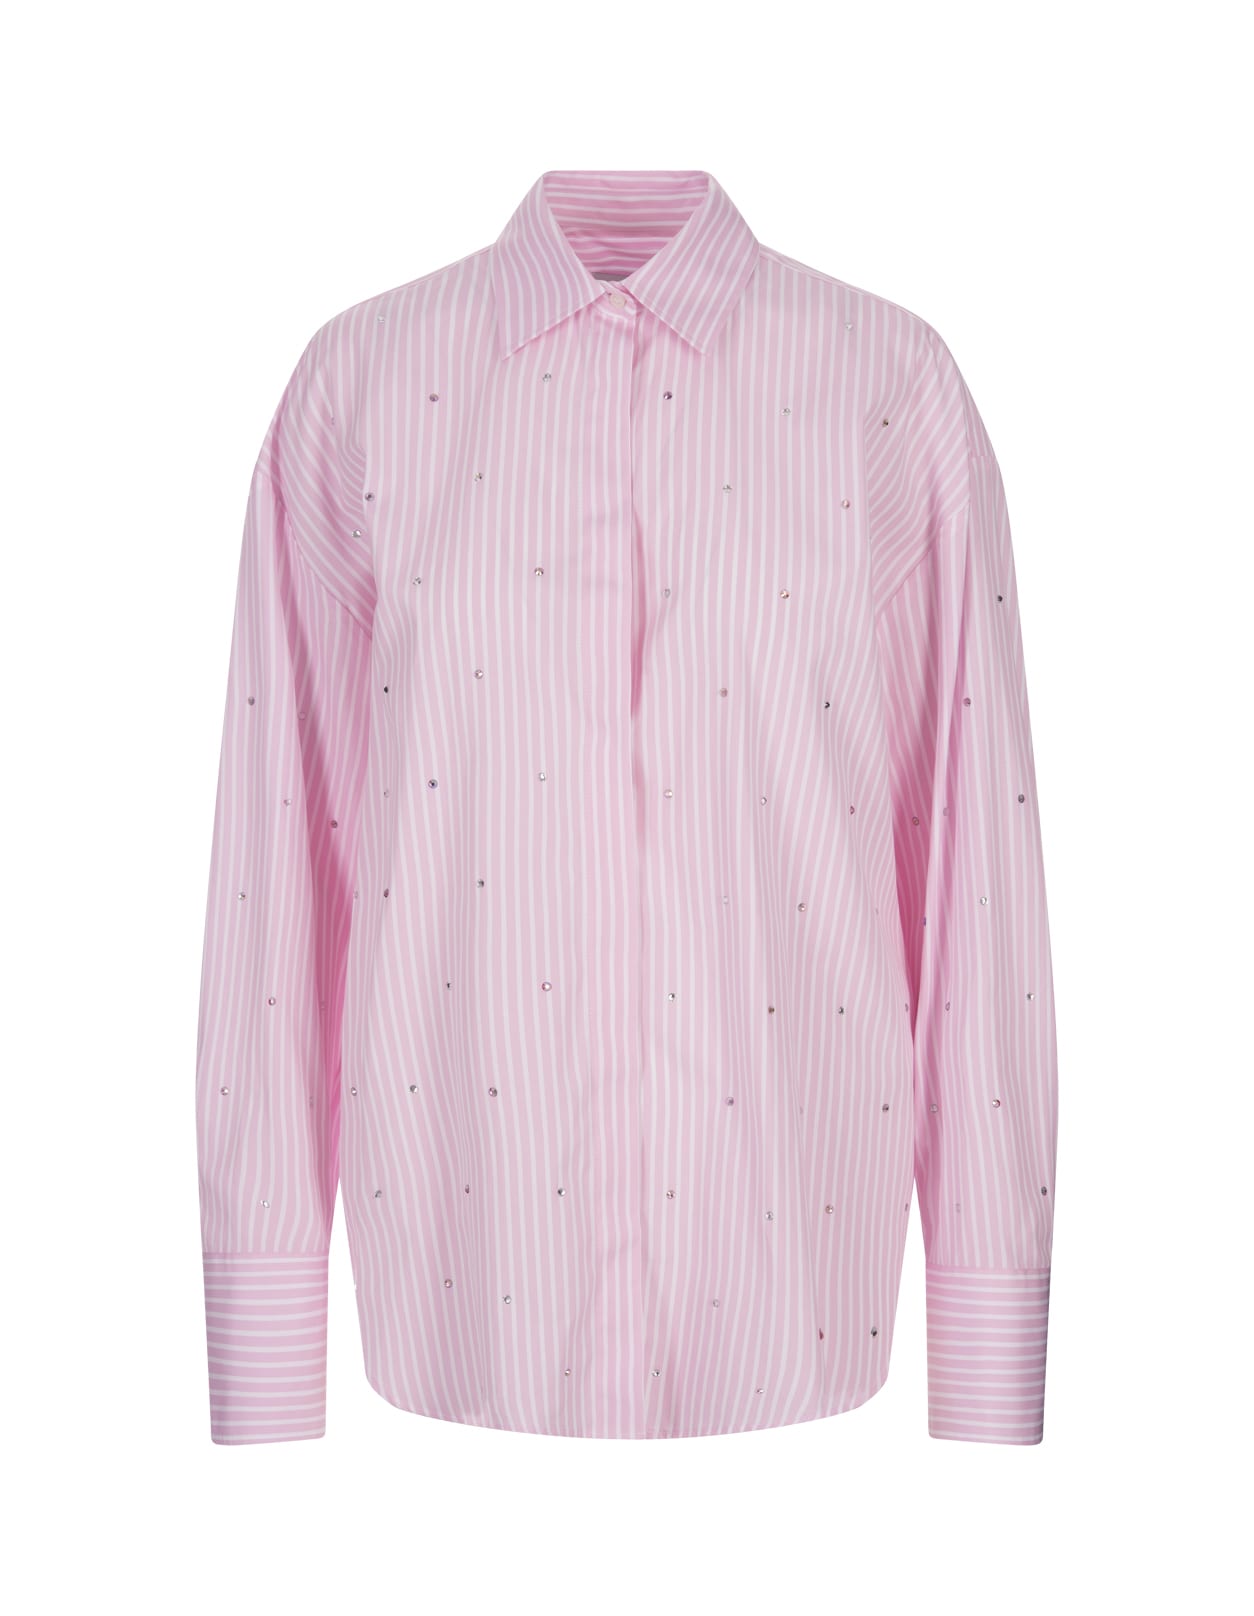 Pink Striped Shirt With Rhinestones